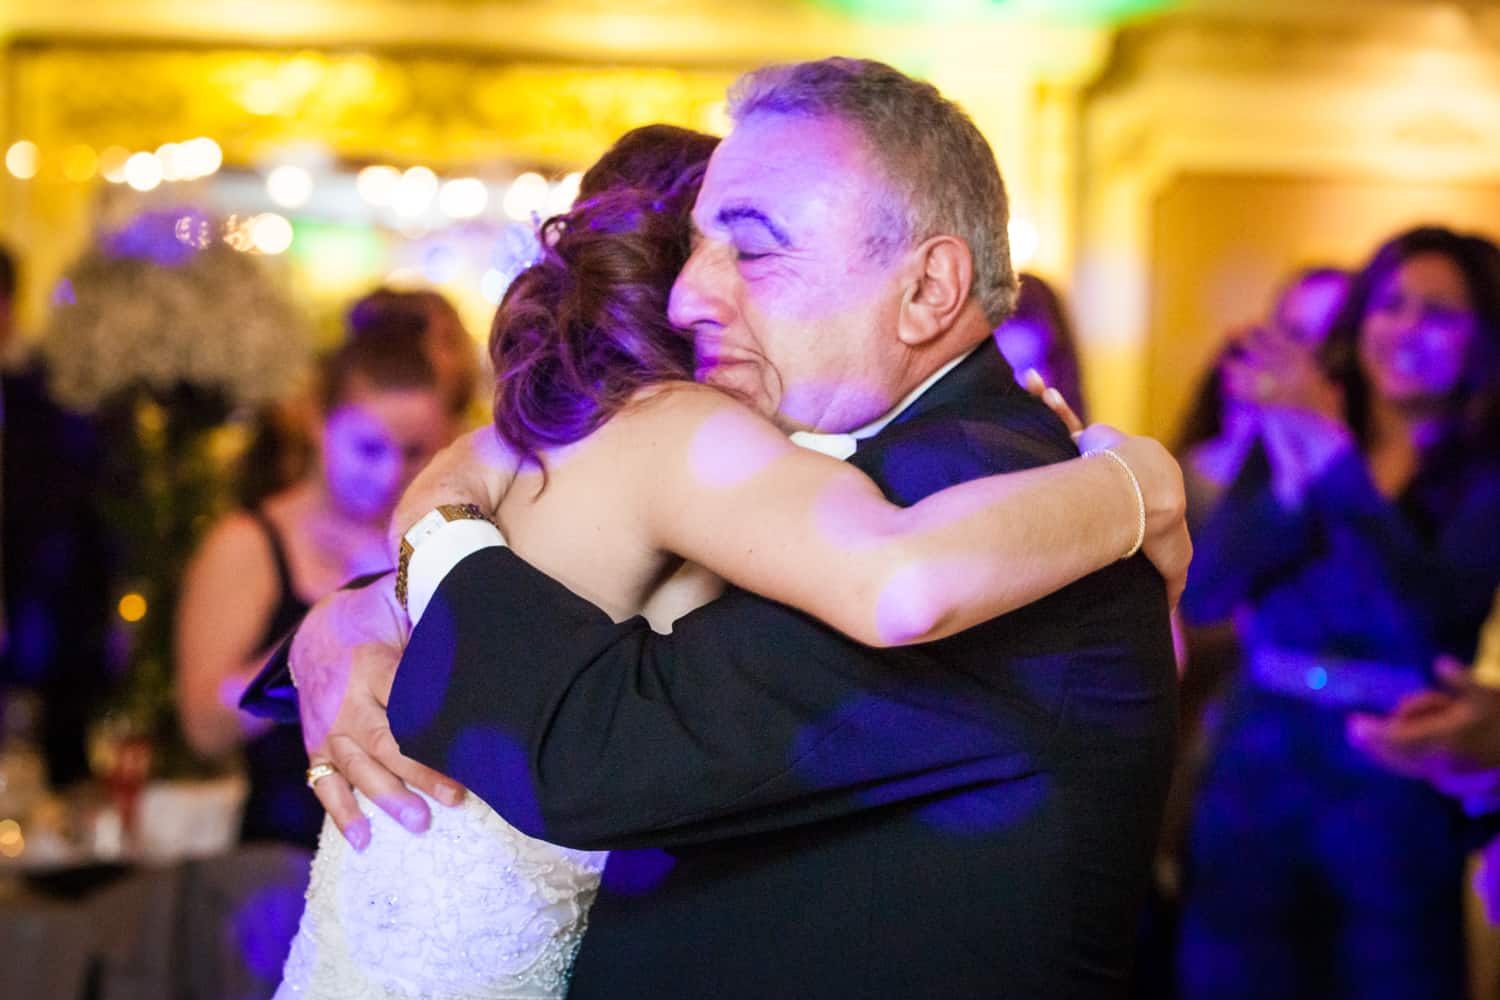 Father hugging bride during Manor wedding reception